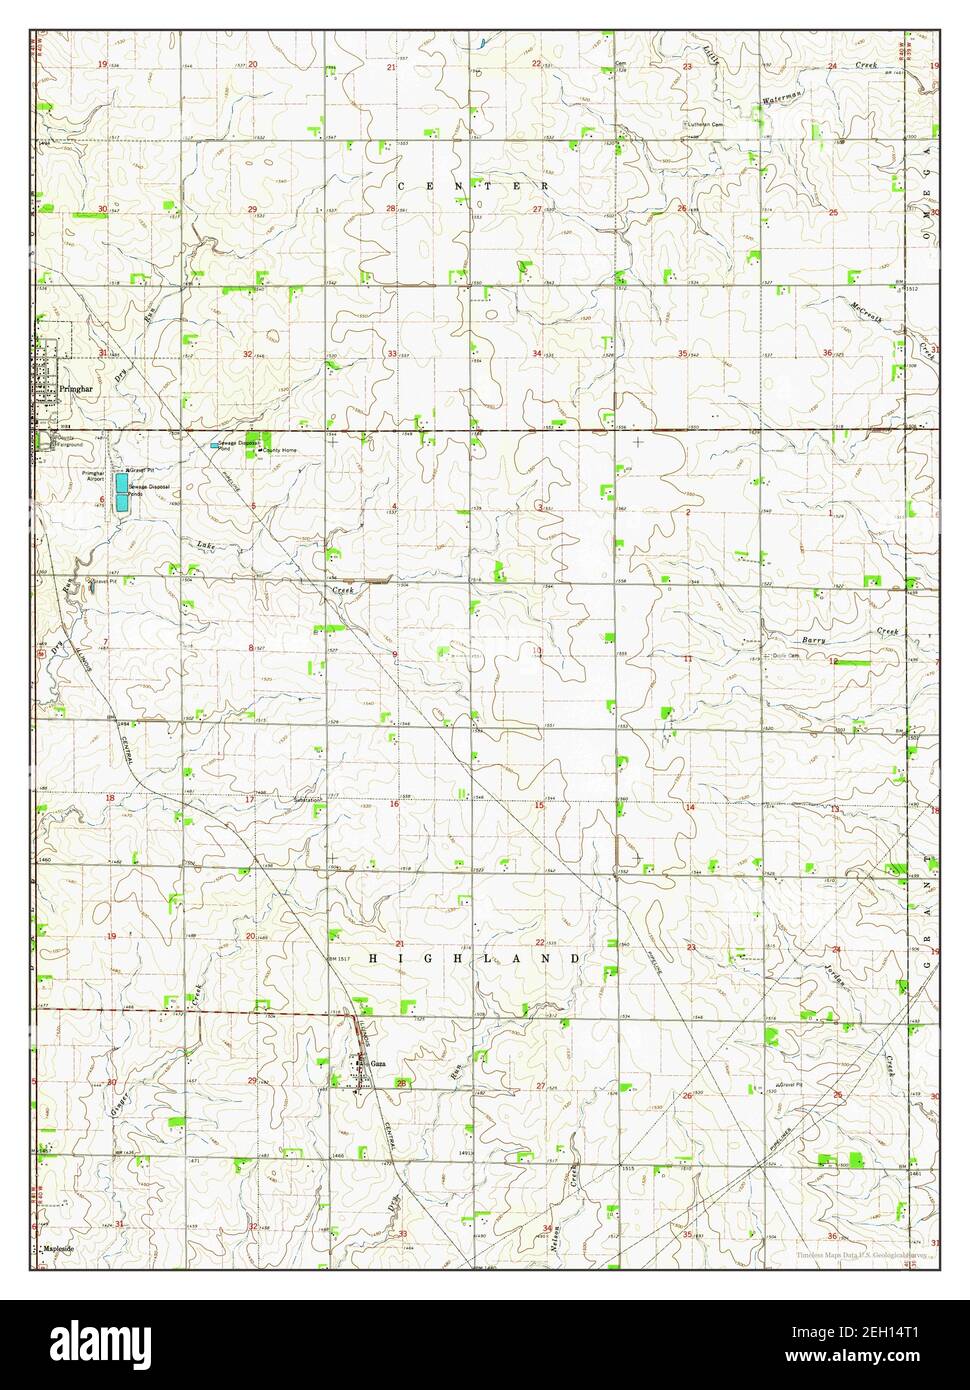 Gaza, Iowa, map 1964, 1:24000, United States of America by Timeless Maps, data U.S. Geological Survey Stock Photo